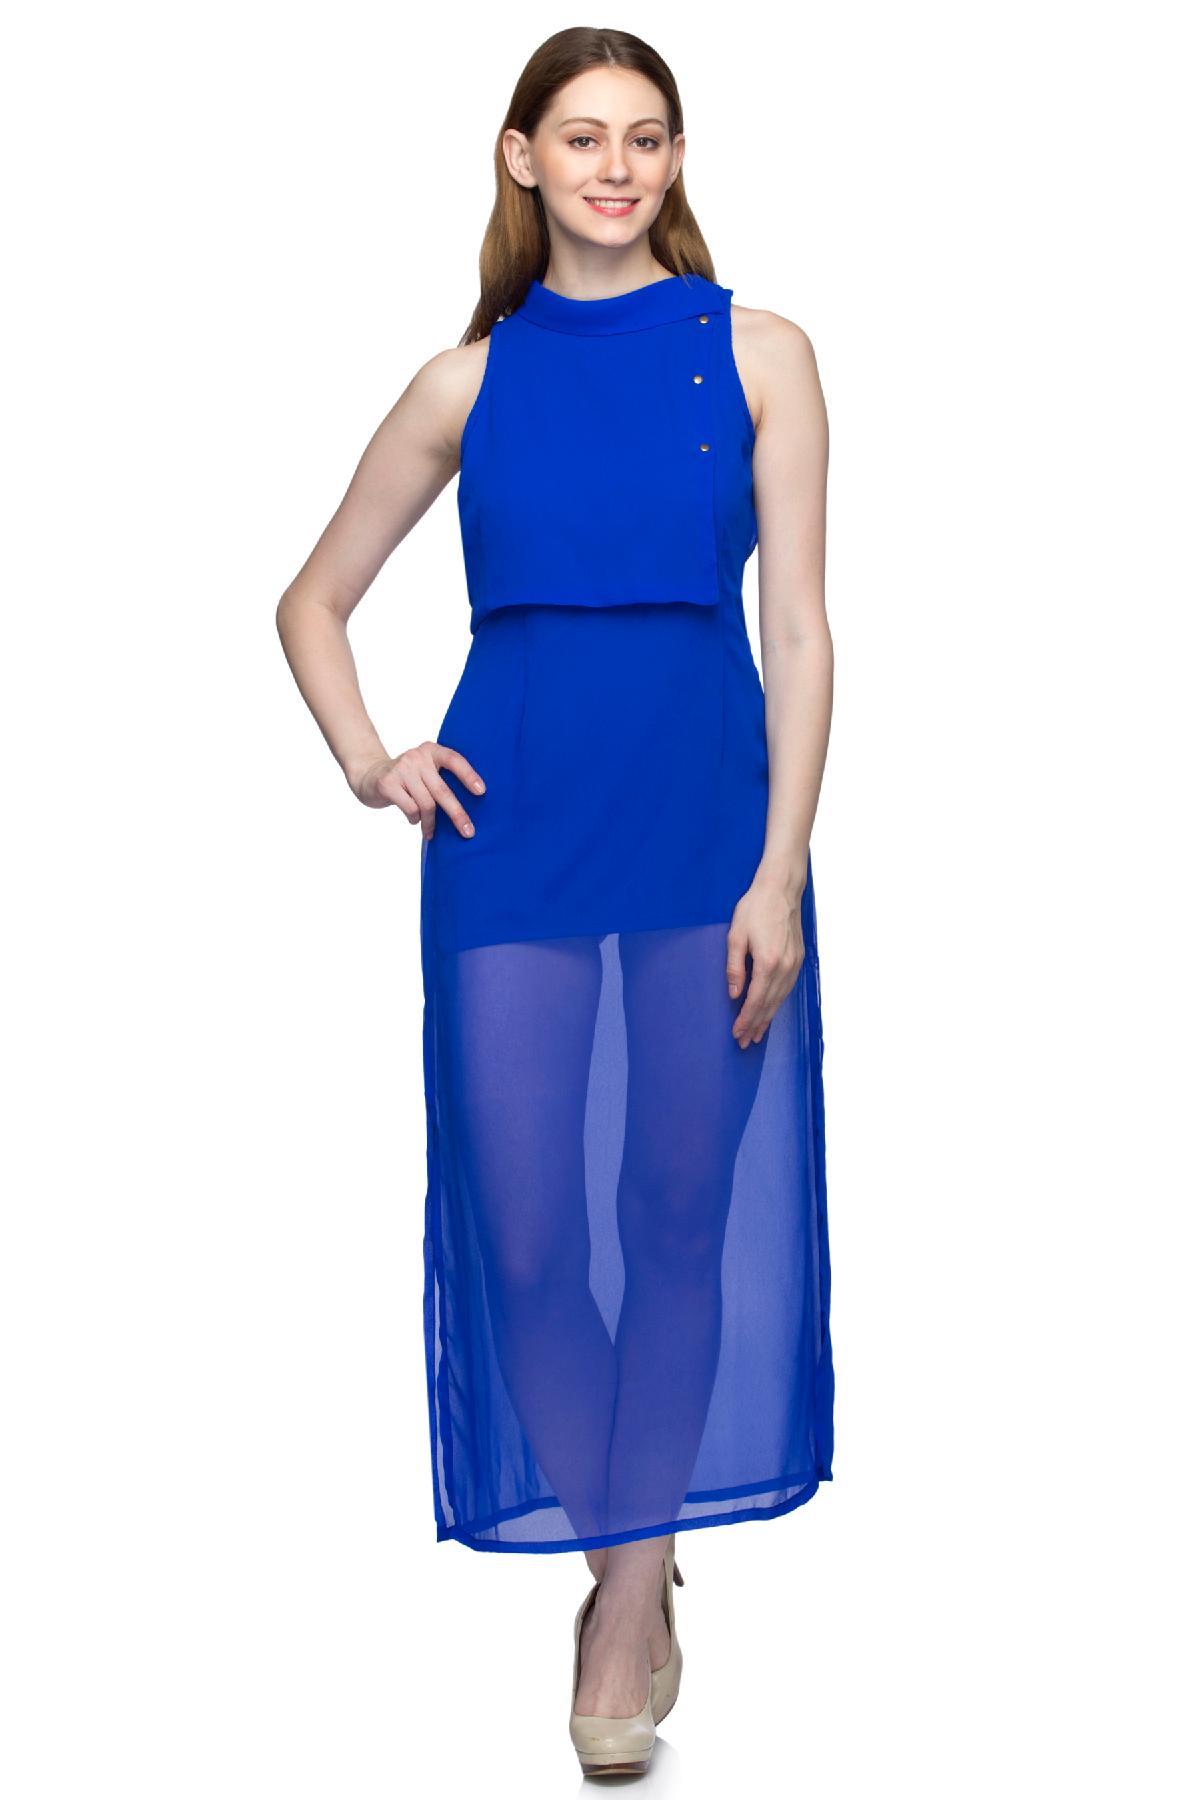 Women's Western Dress - Style Deltin Royal Blue - Finebuy